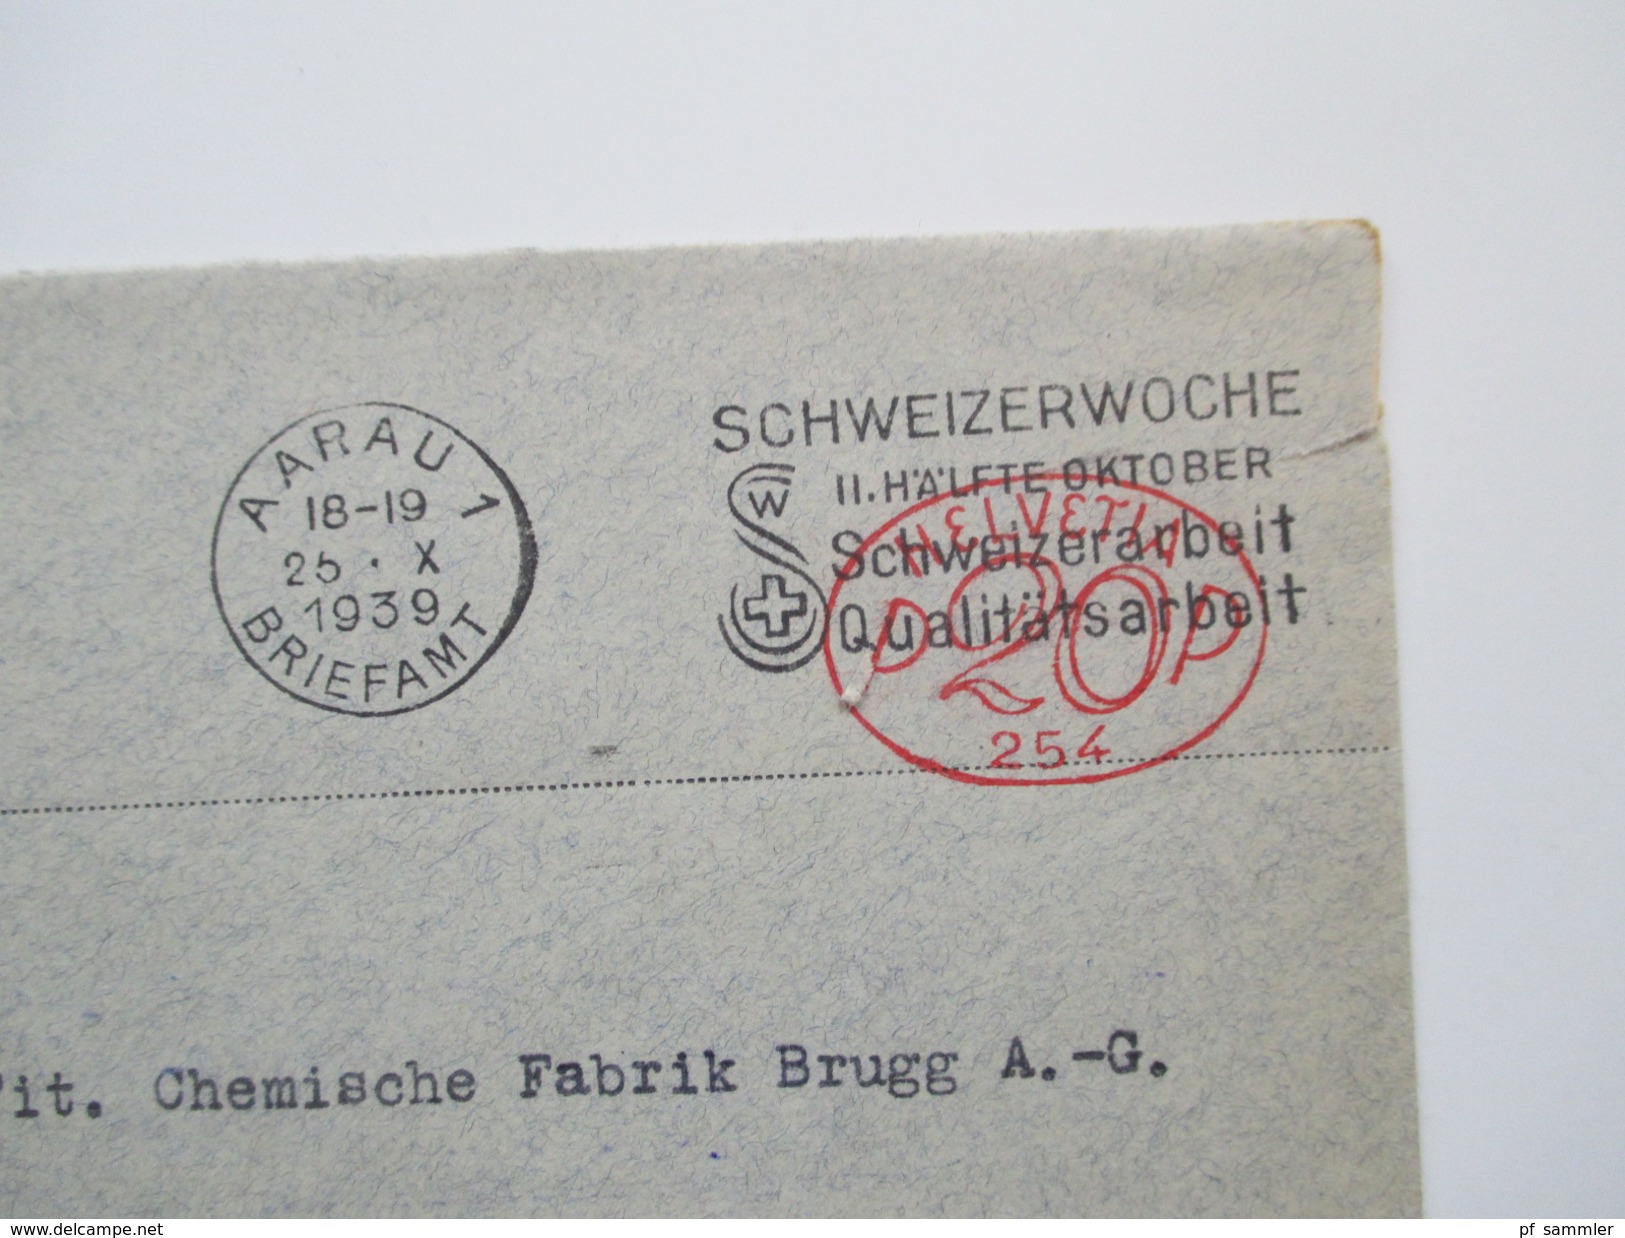 Schweiz 1926 - 39 roter Freistempel P20P / PP zusätzlich abgestempelt. 8 Belege! Verschiedene Nummern!